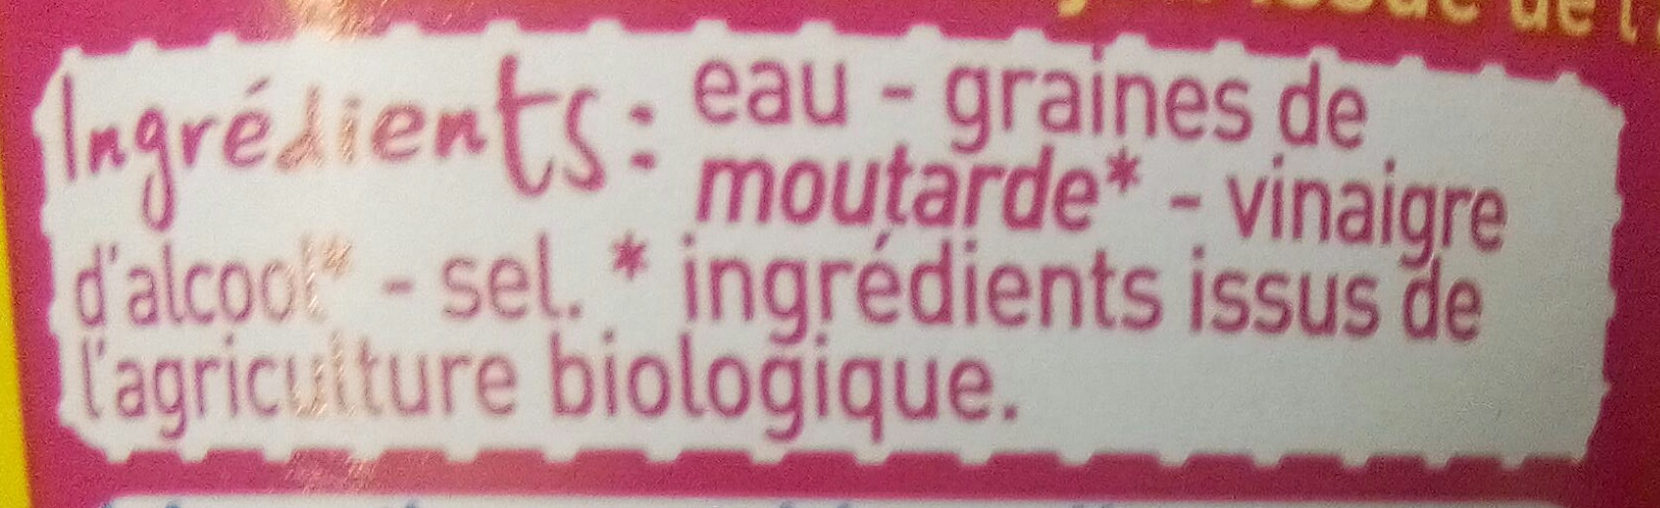 Moutarde de Dijon Bio - Ingredientes - fr